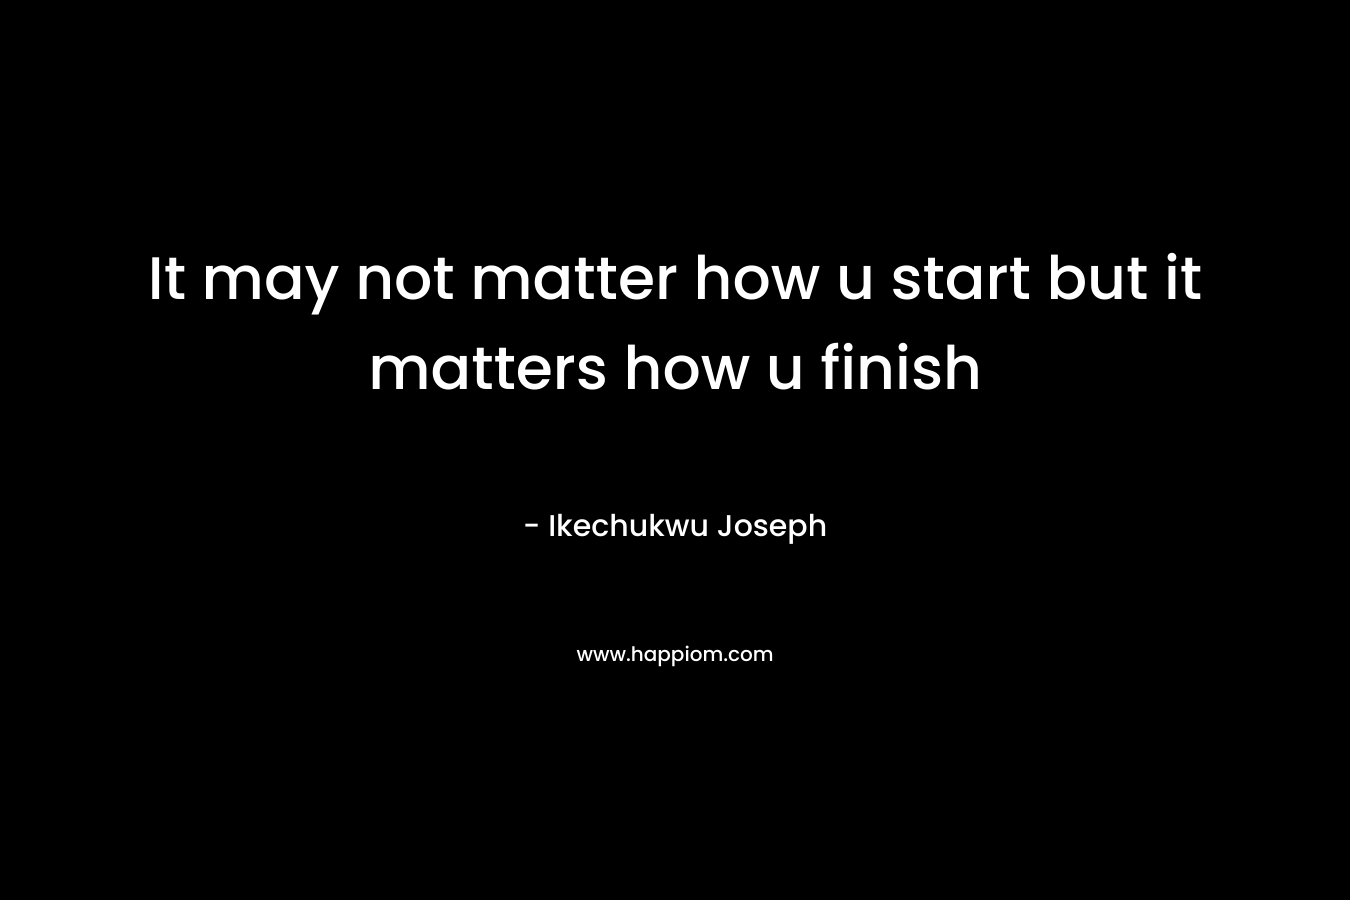 It may not matter how u start but it matters how u finish